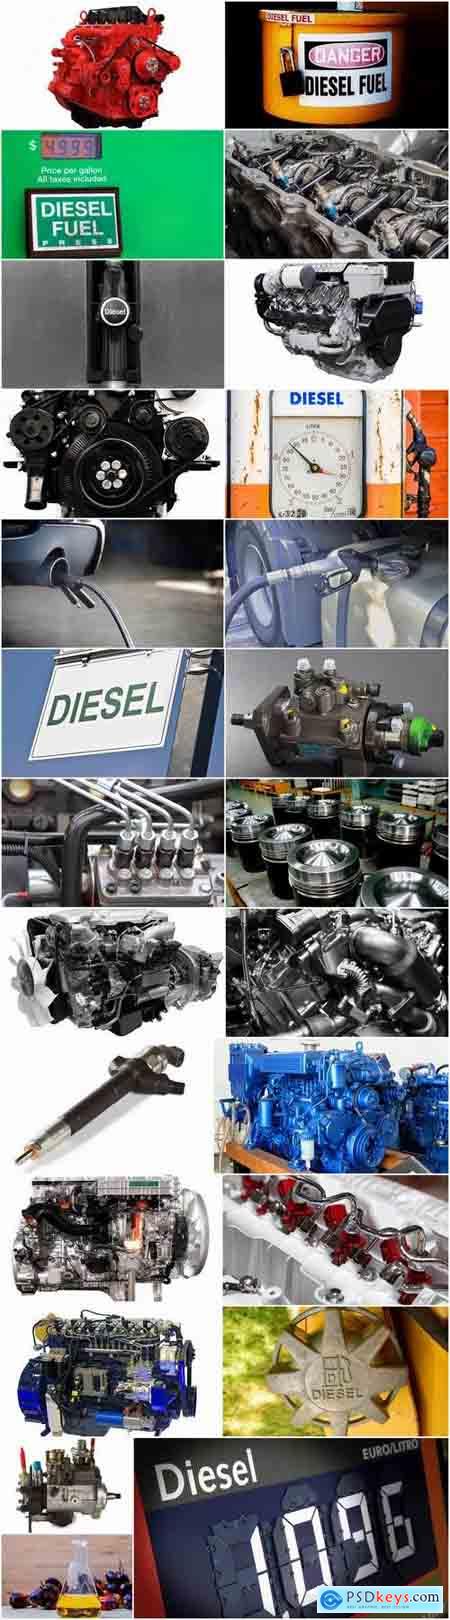 Diesel engine diesel equipment components 25 HQ Jpeg